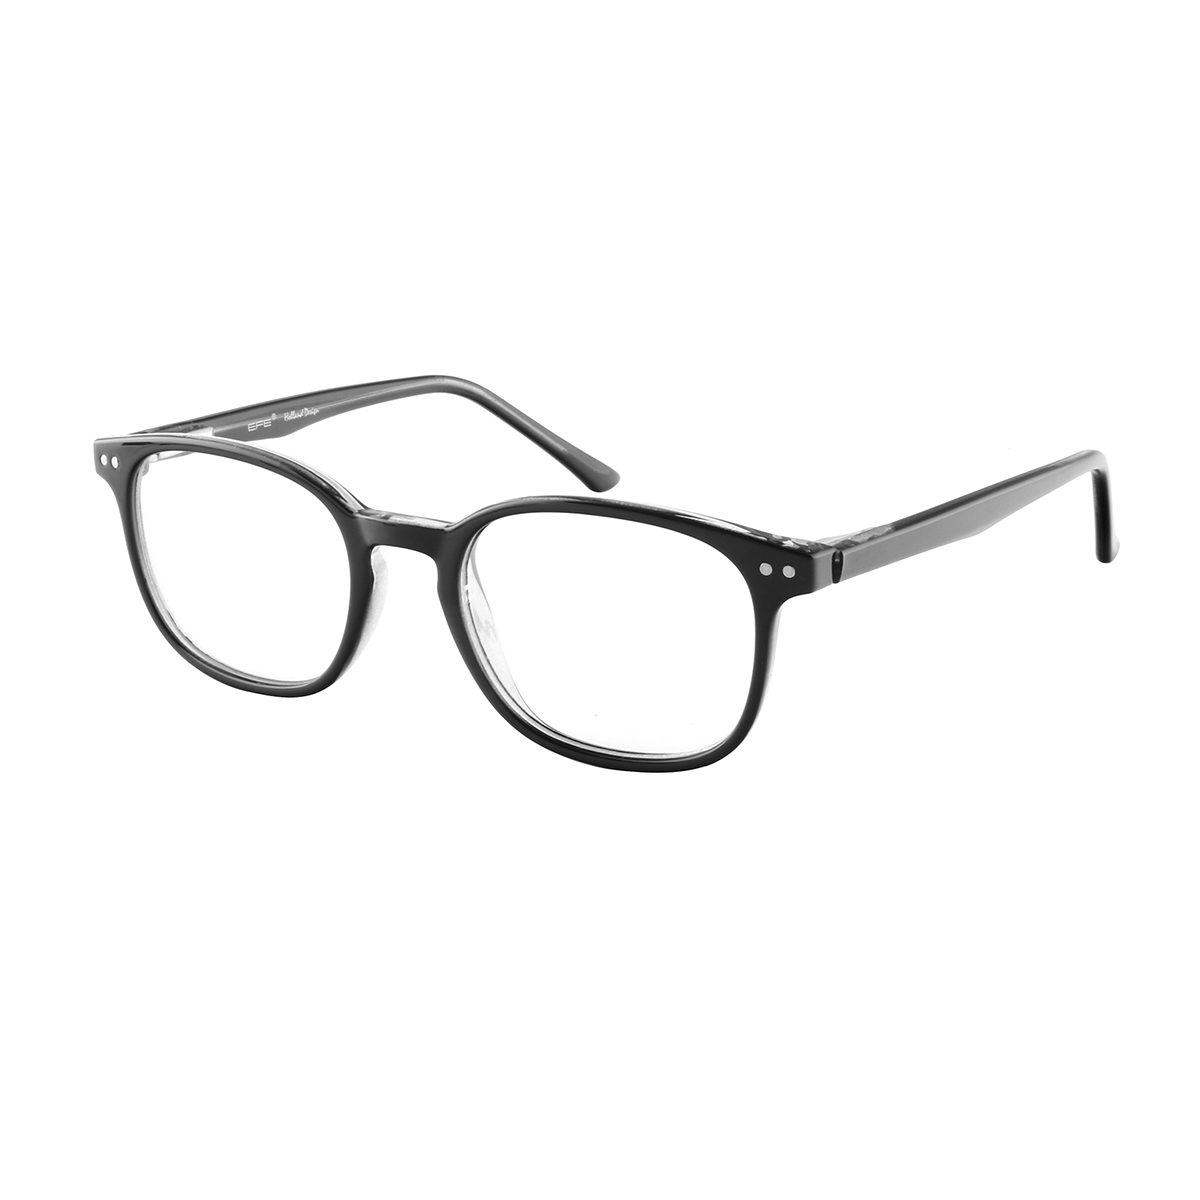 Laconia - Square Black Reading Glasses for Men & Women